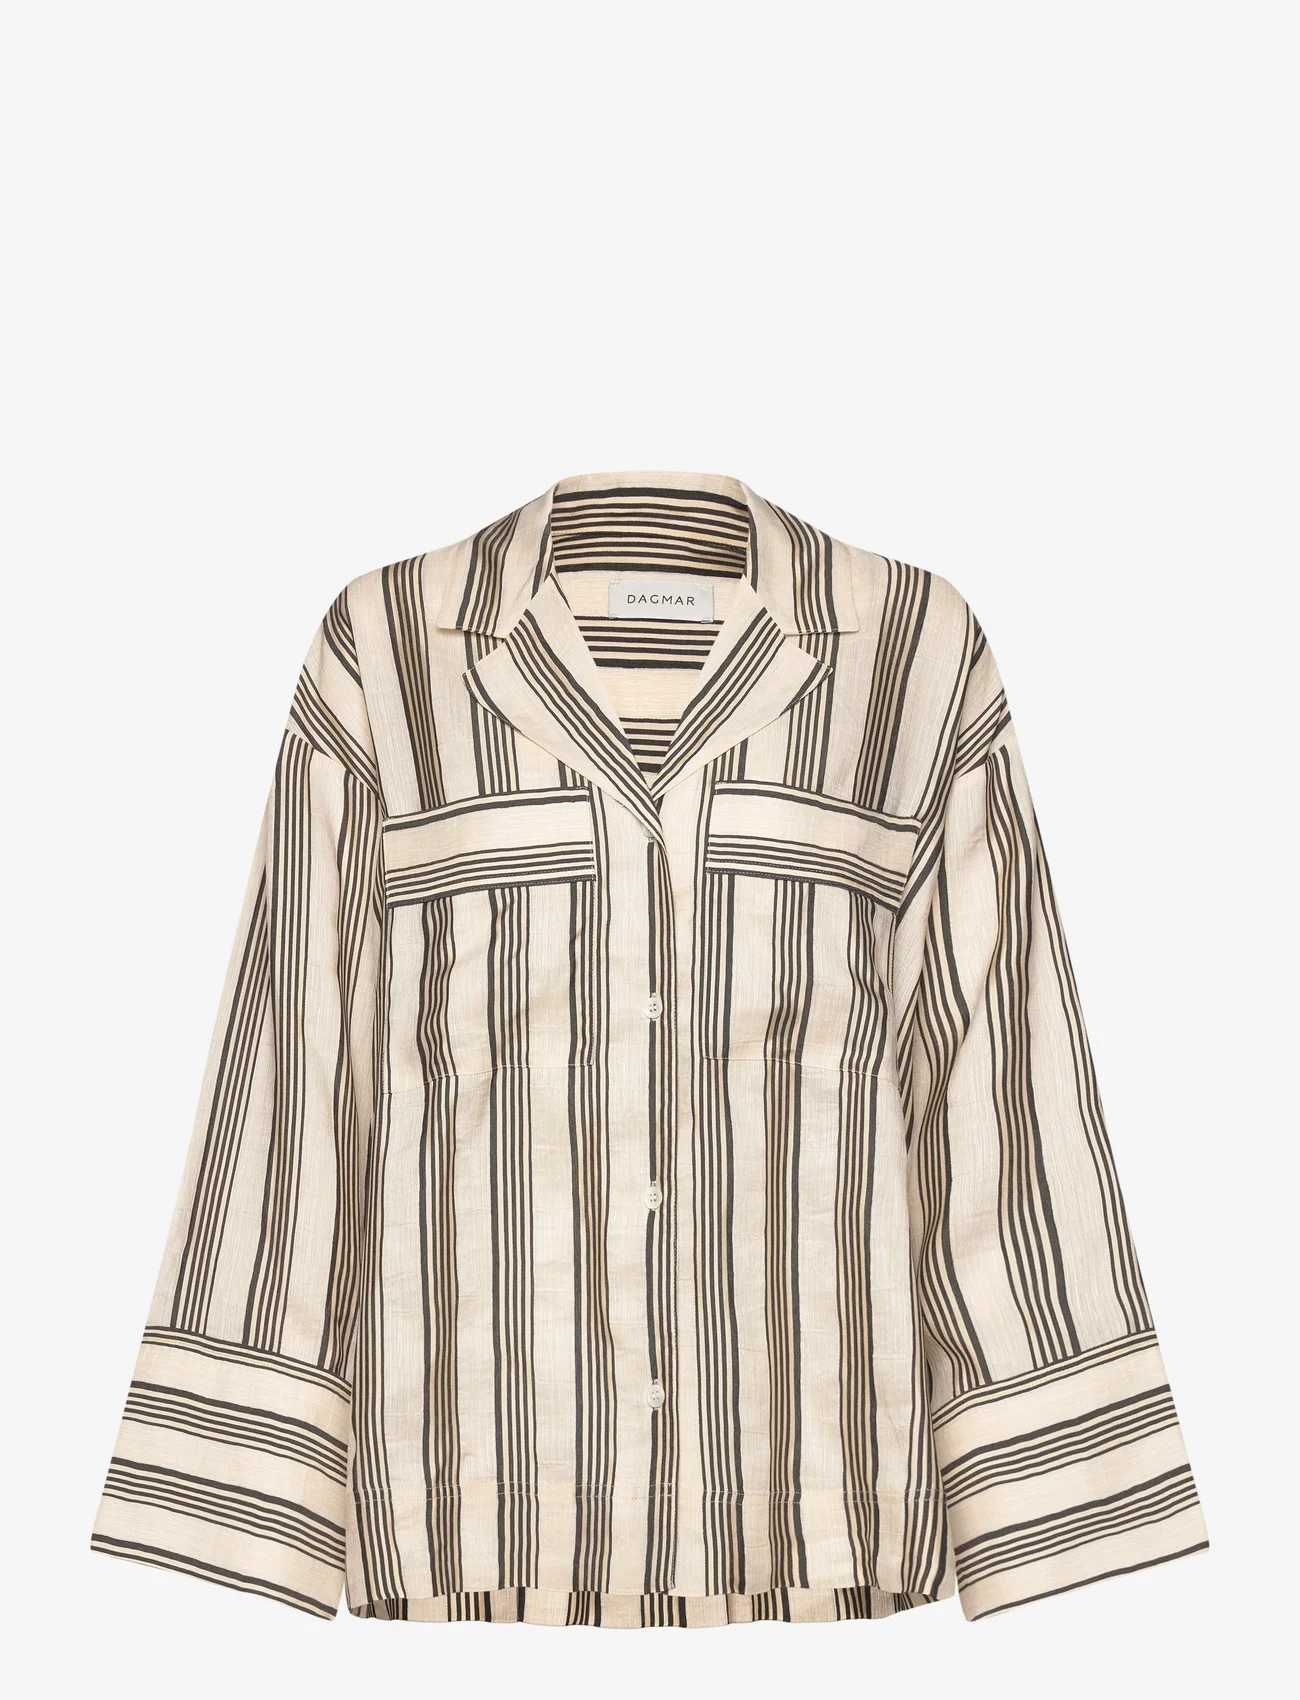 House Of Dagmar - Striped pyjama shirt - oberteile - ivory/black - 0